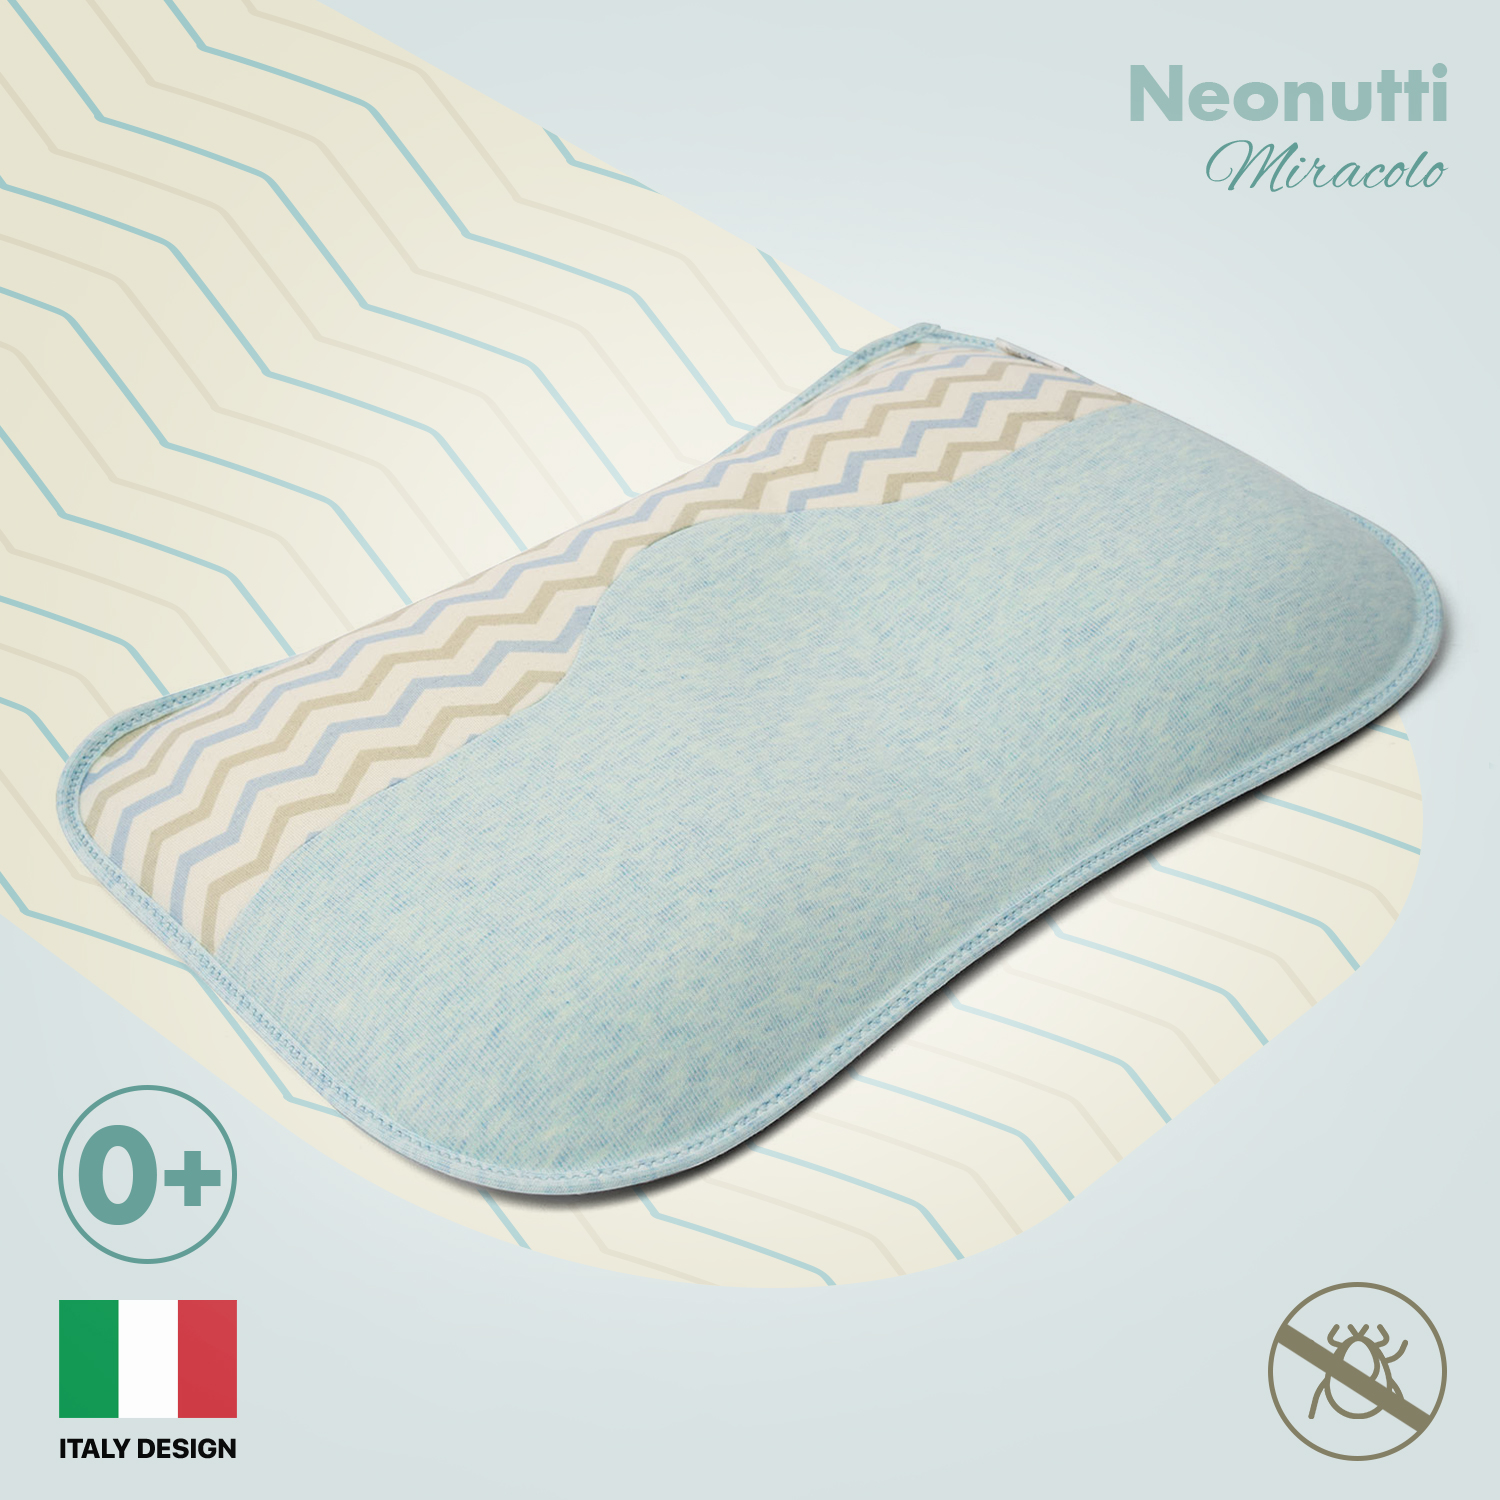 Подушка для новорожденного Nuovita Neonutti Miracolo Dipinto Голубая - фото 2